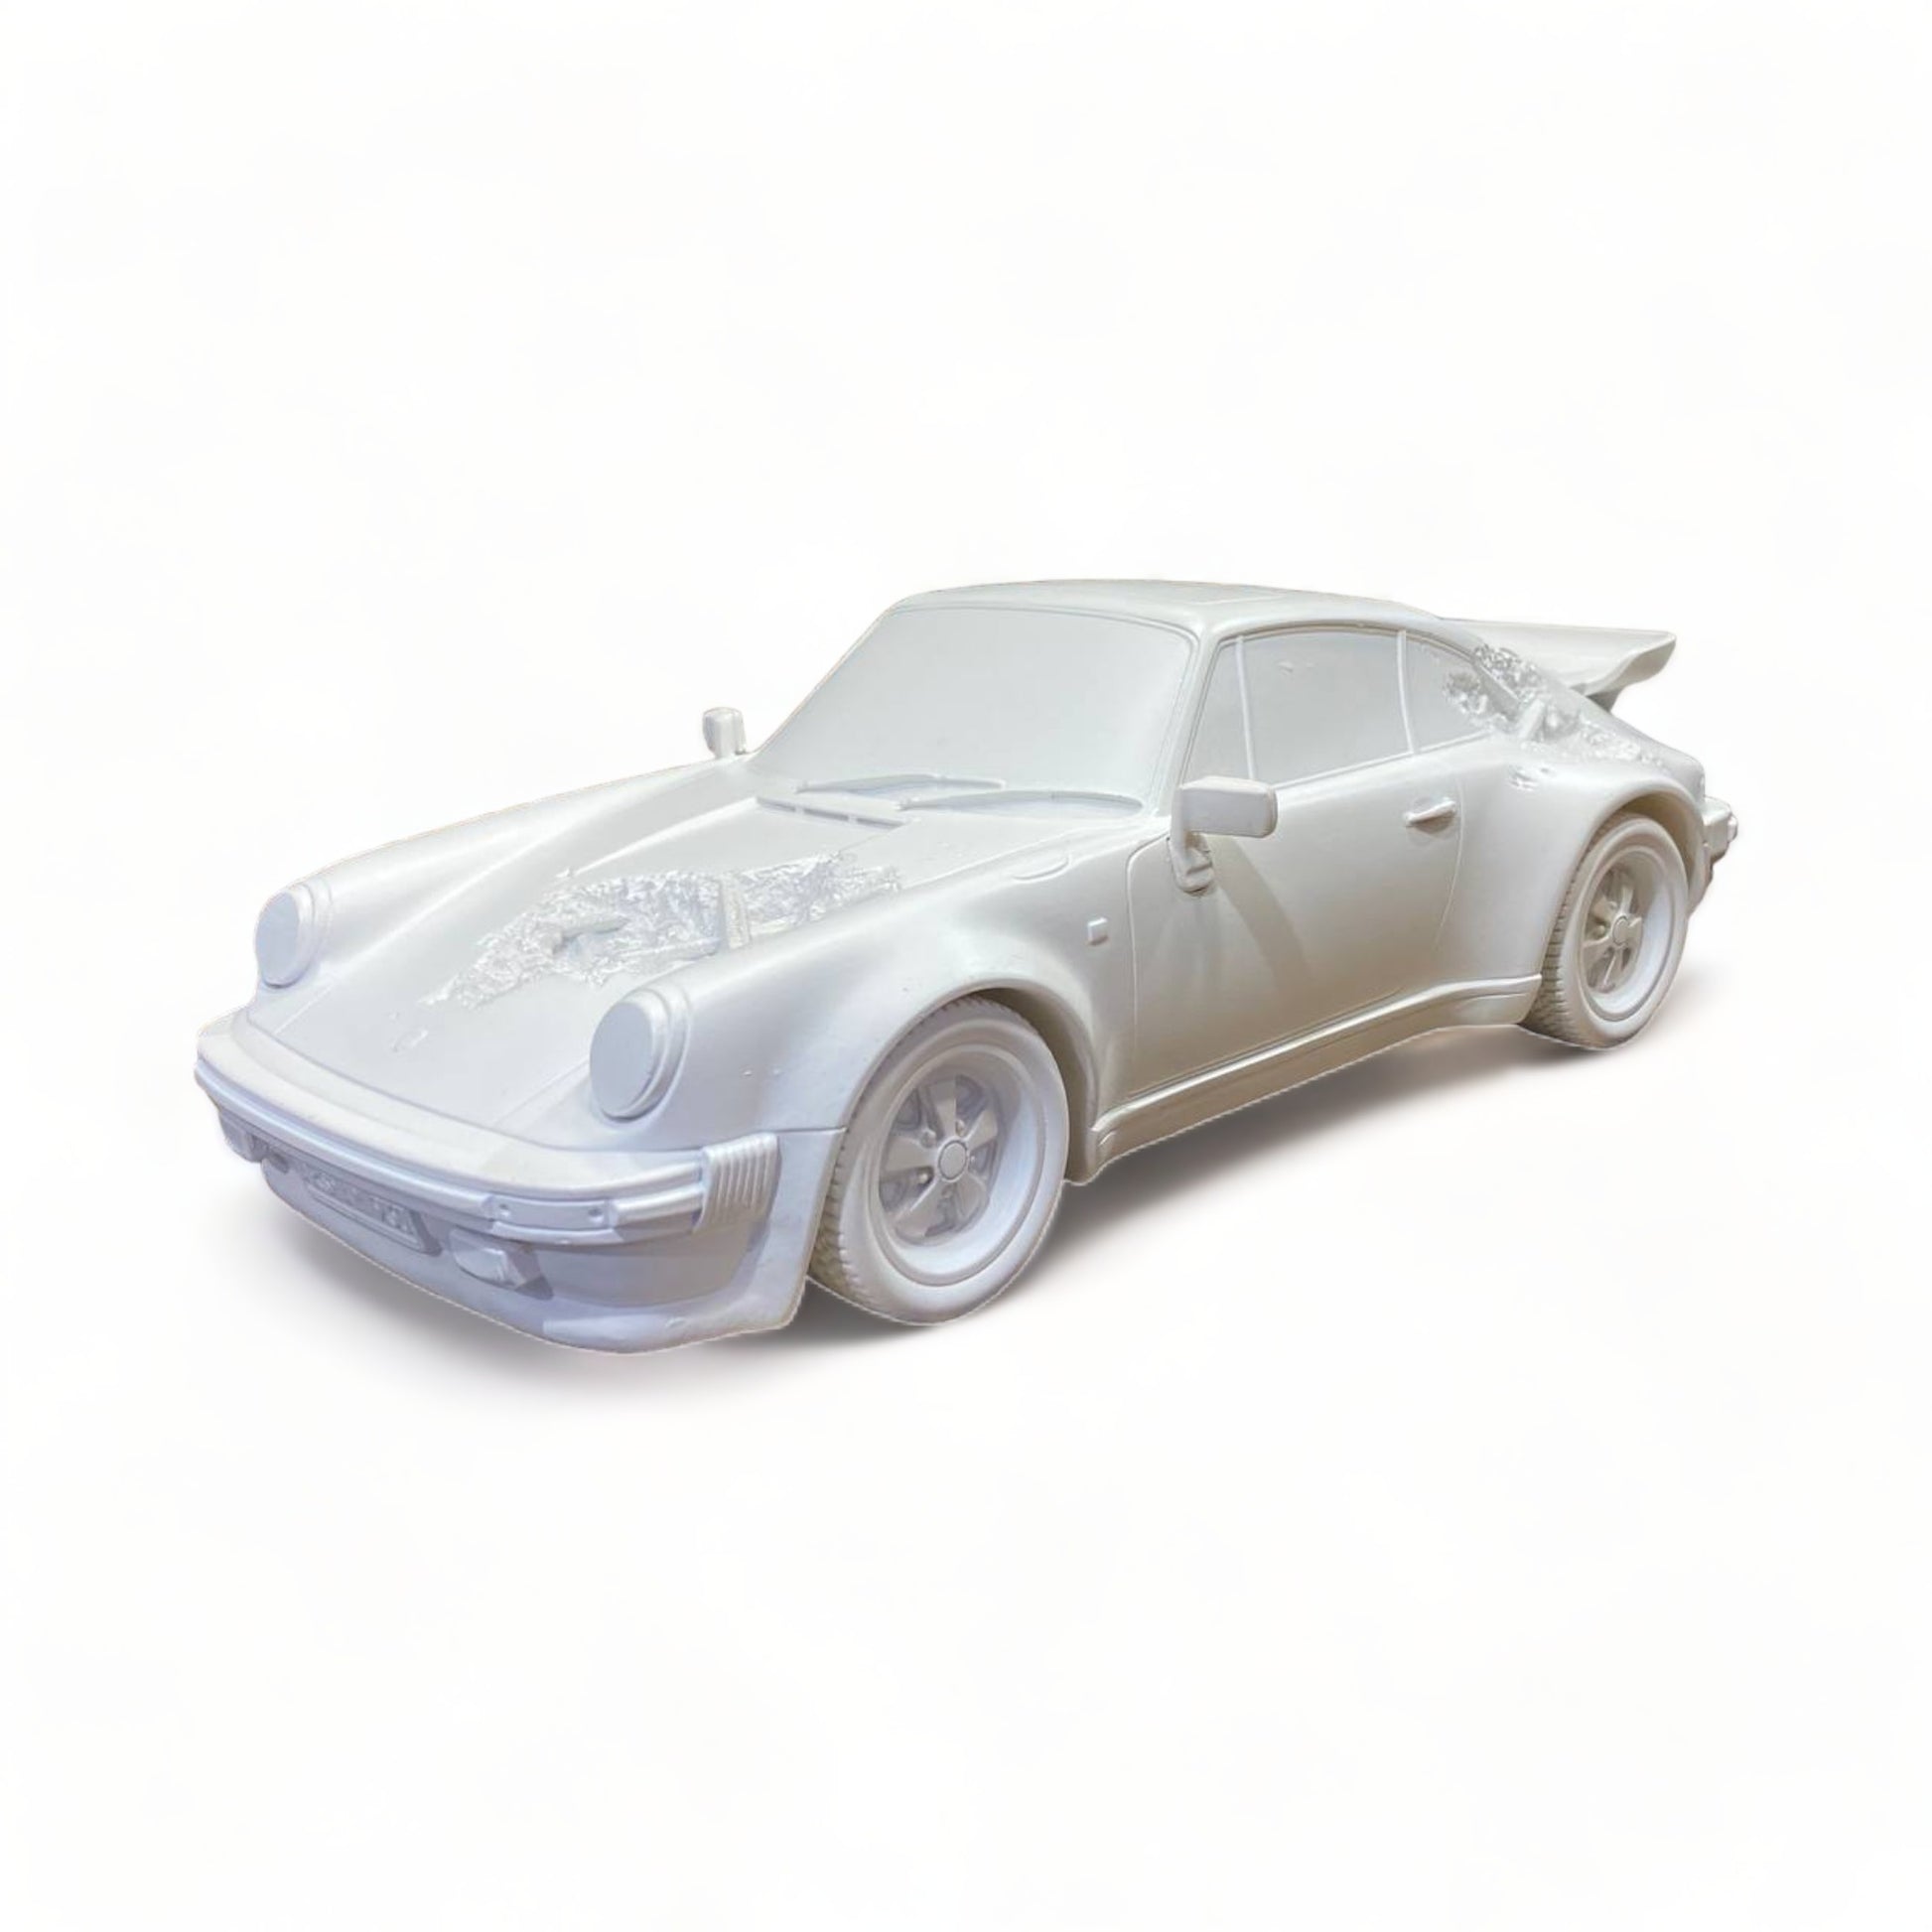 1/12 Arsham Editions Porsche Eroded 911 Turbo 3.3 (930)-1986 Classic White|Sold in Dturman.com Dubai UAE.